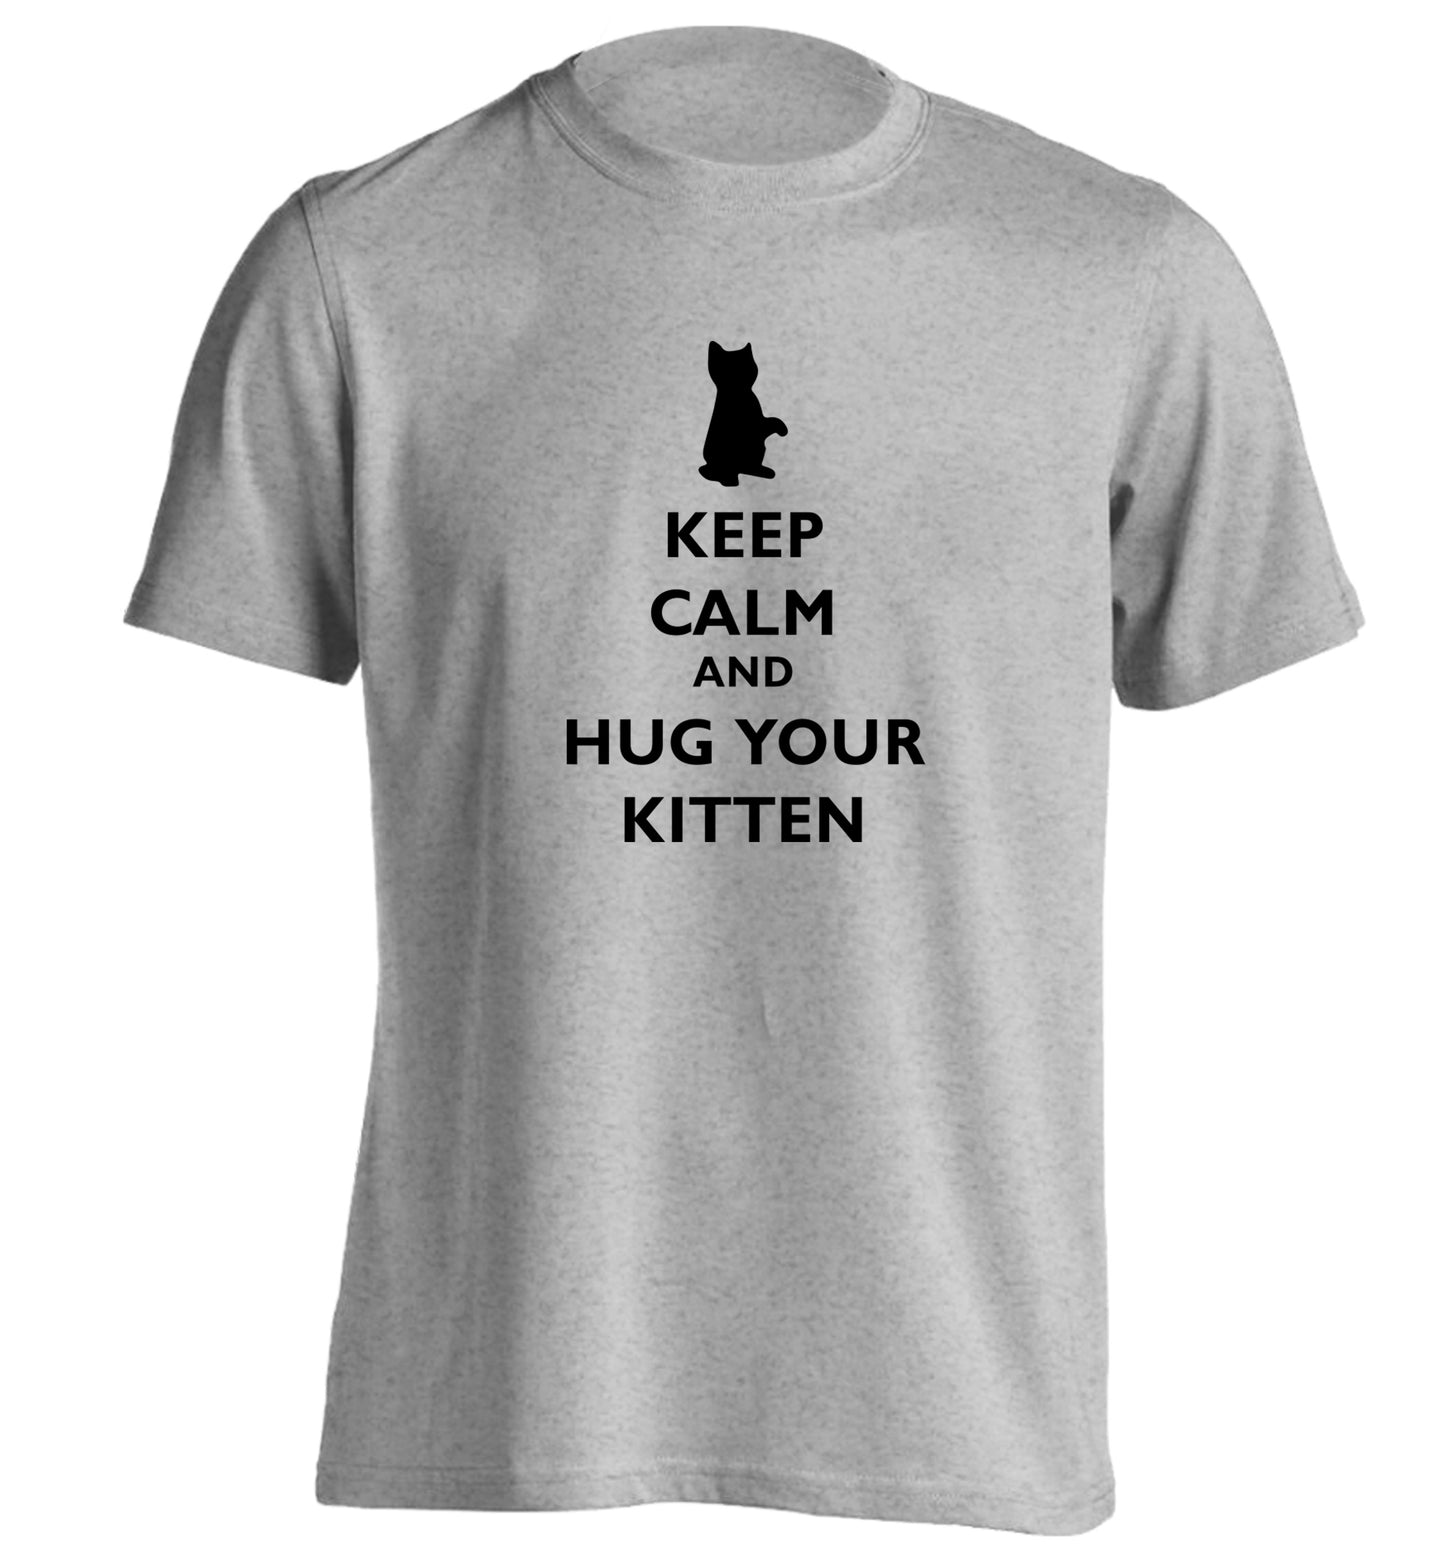 Keep calm and hug your kitten adults unisex grey Tshirt 2XL